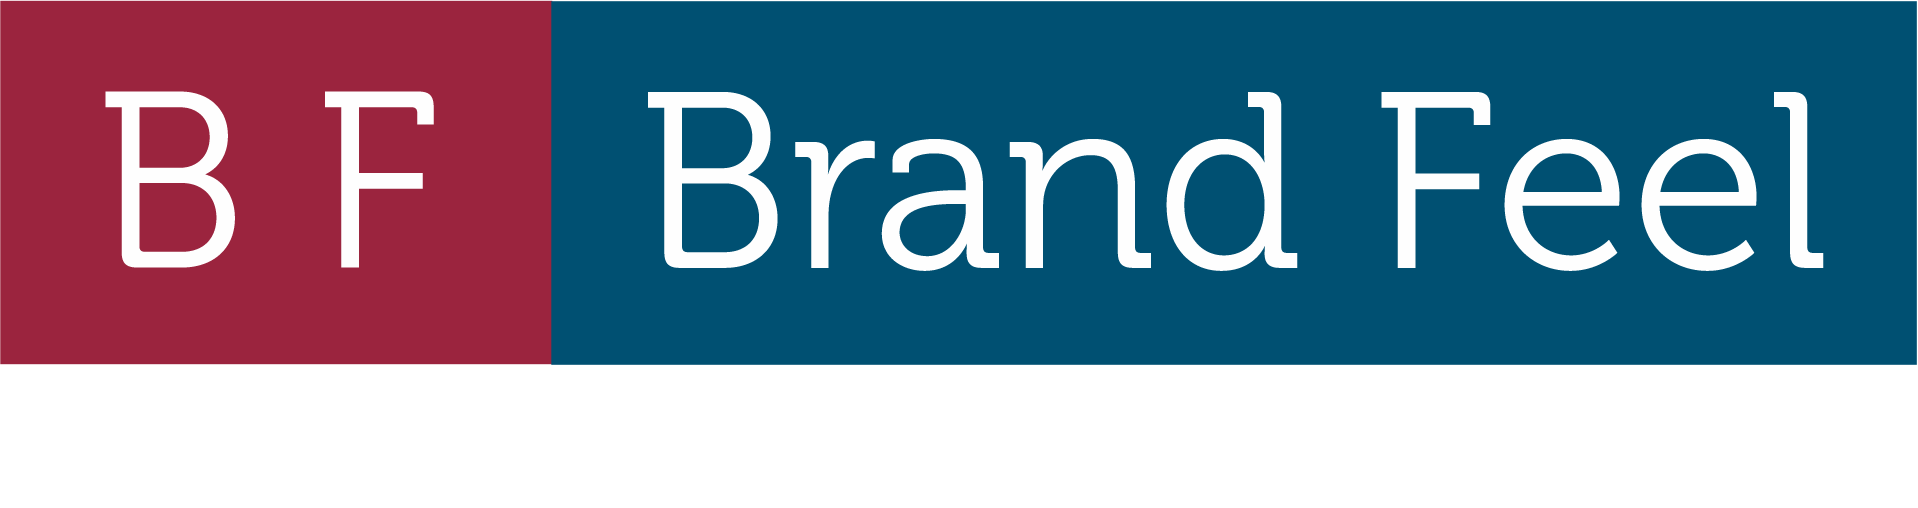 BrandFeel - Agencia de comunicación